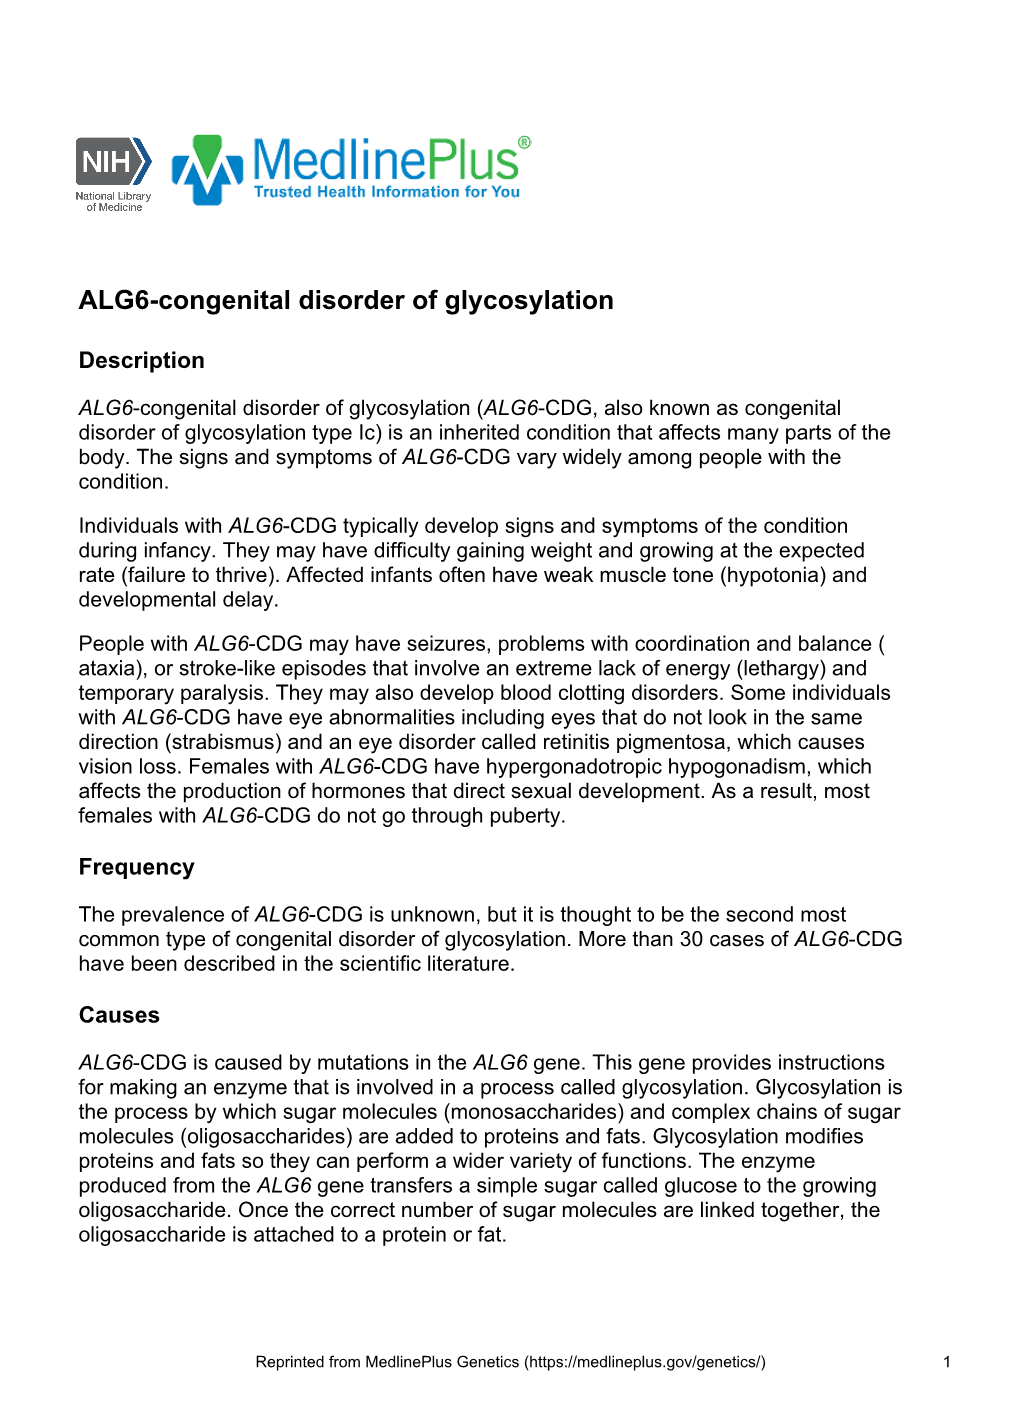 ALG6-Congenital Disorder of Glycosylation